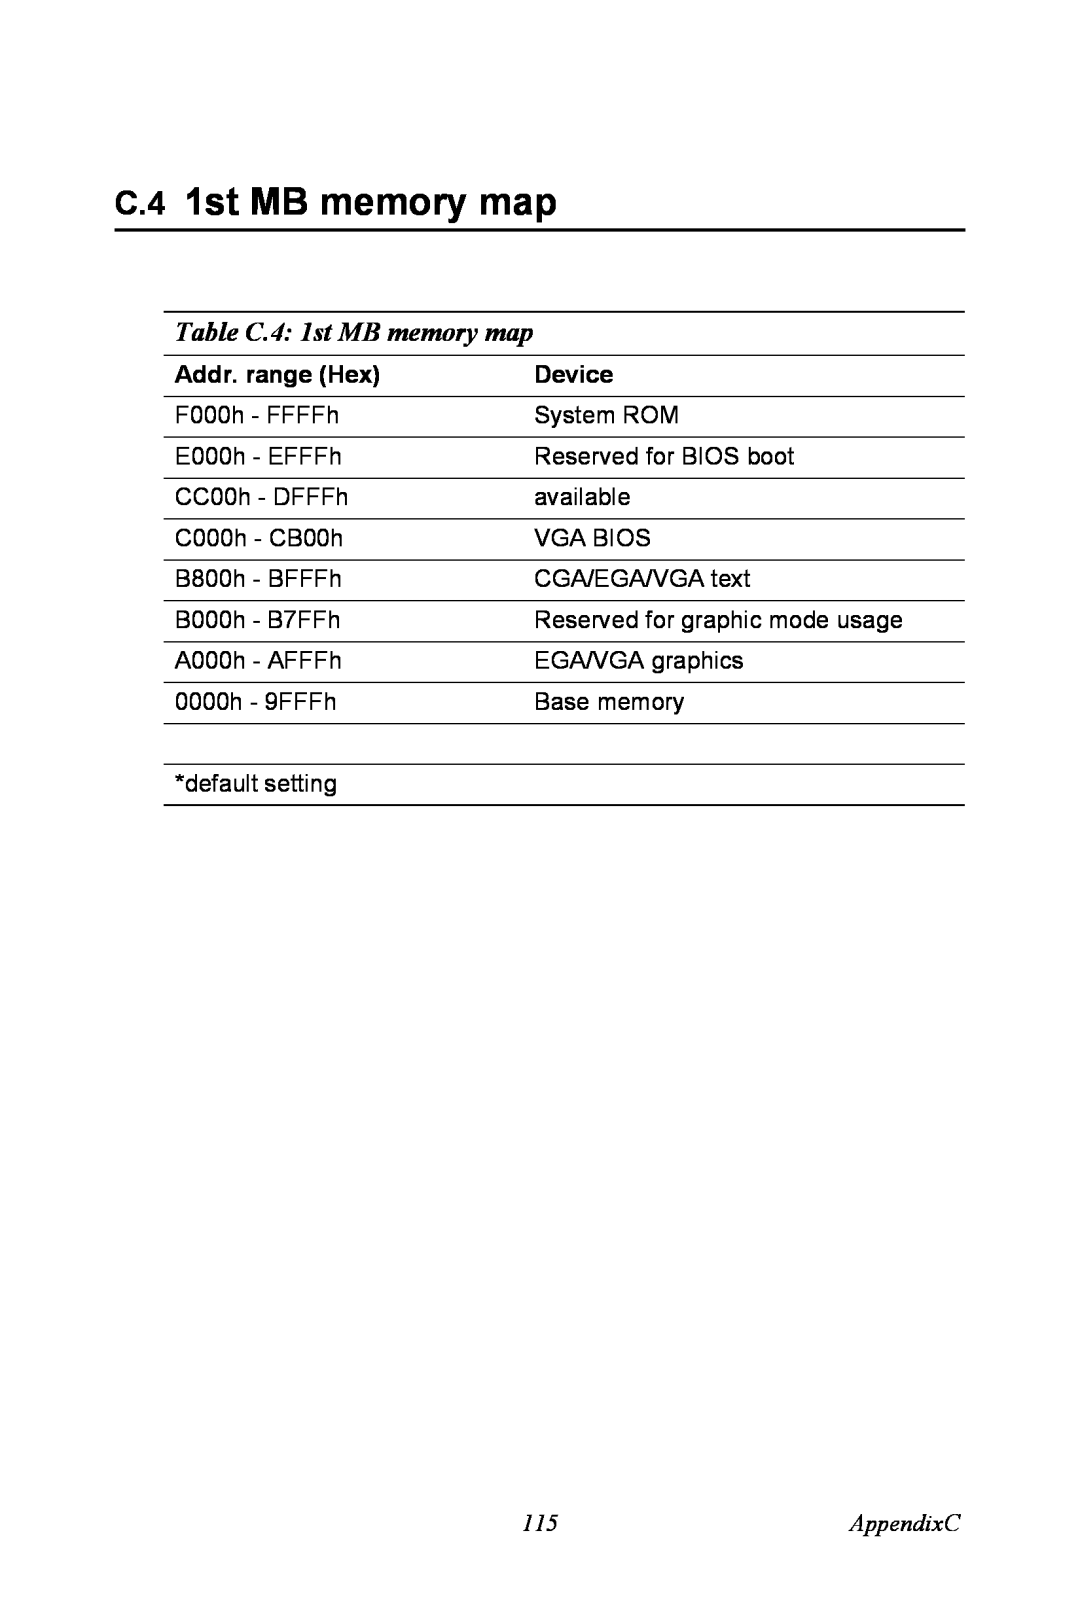 Intel PCM-3370 user manual Table C.4 1st MB memory map, Addr. range Hex, Device, AppendixC 